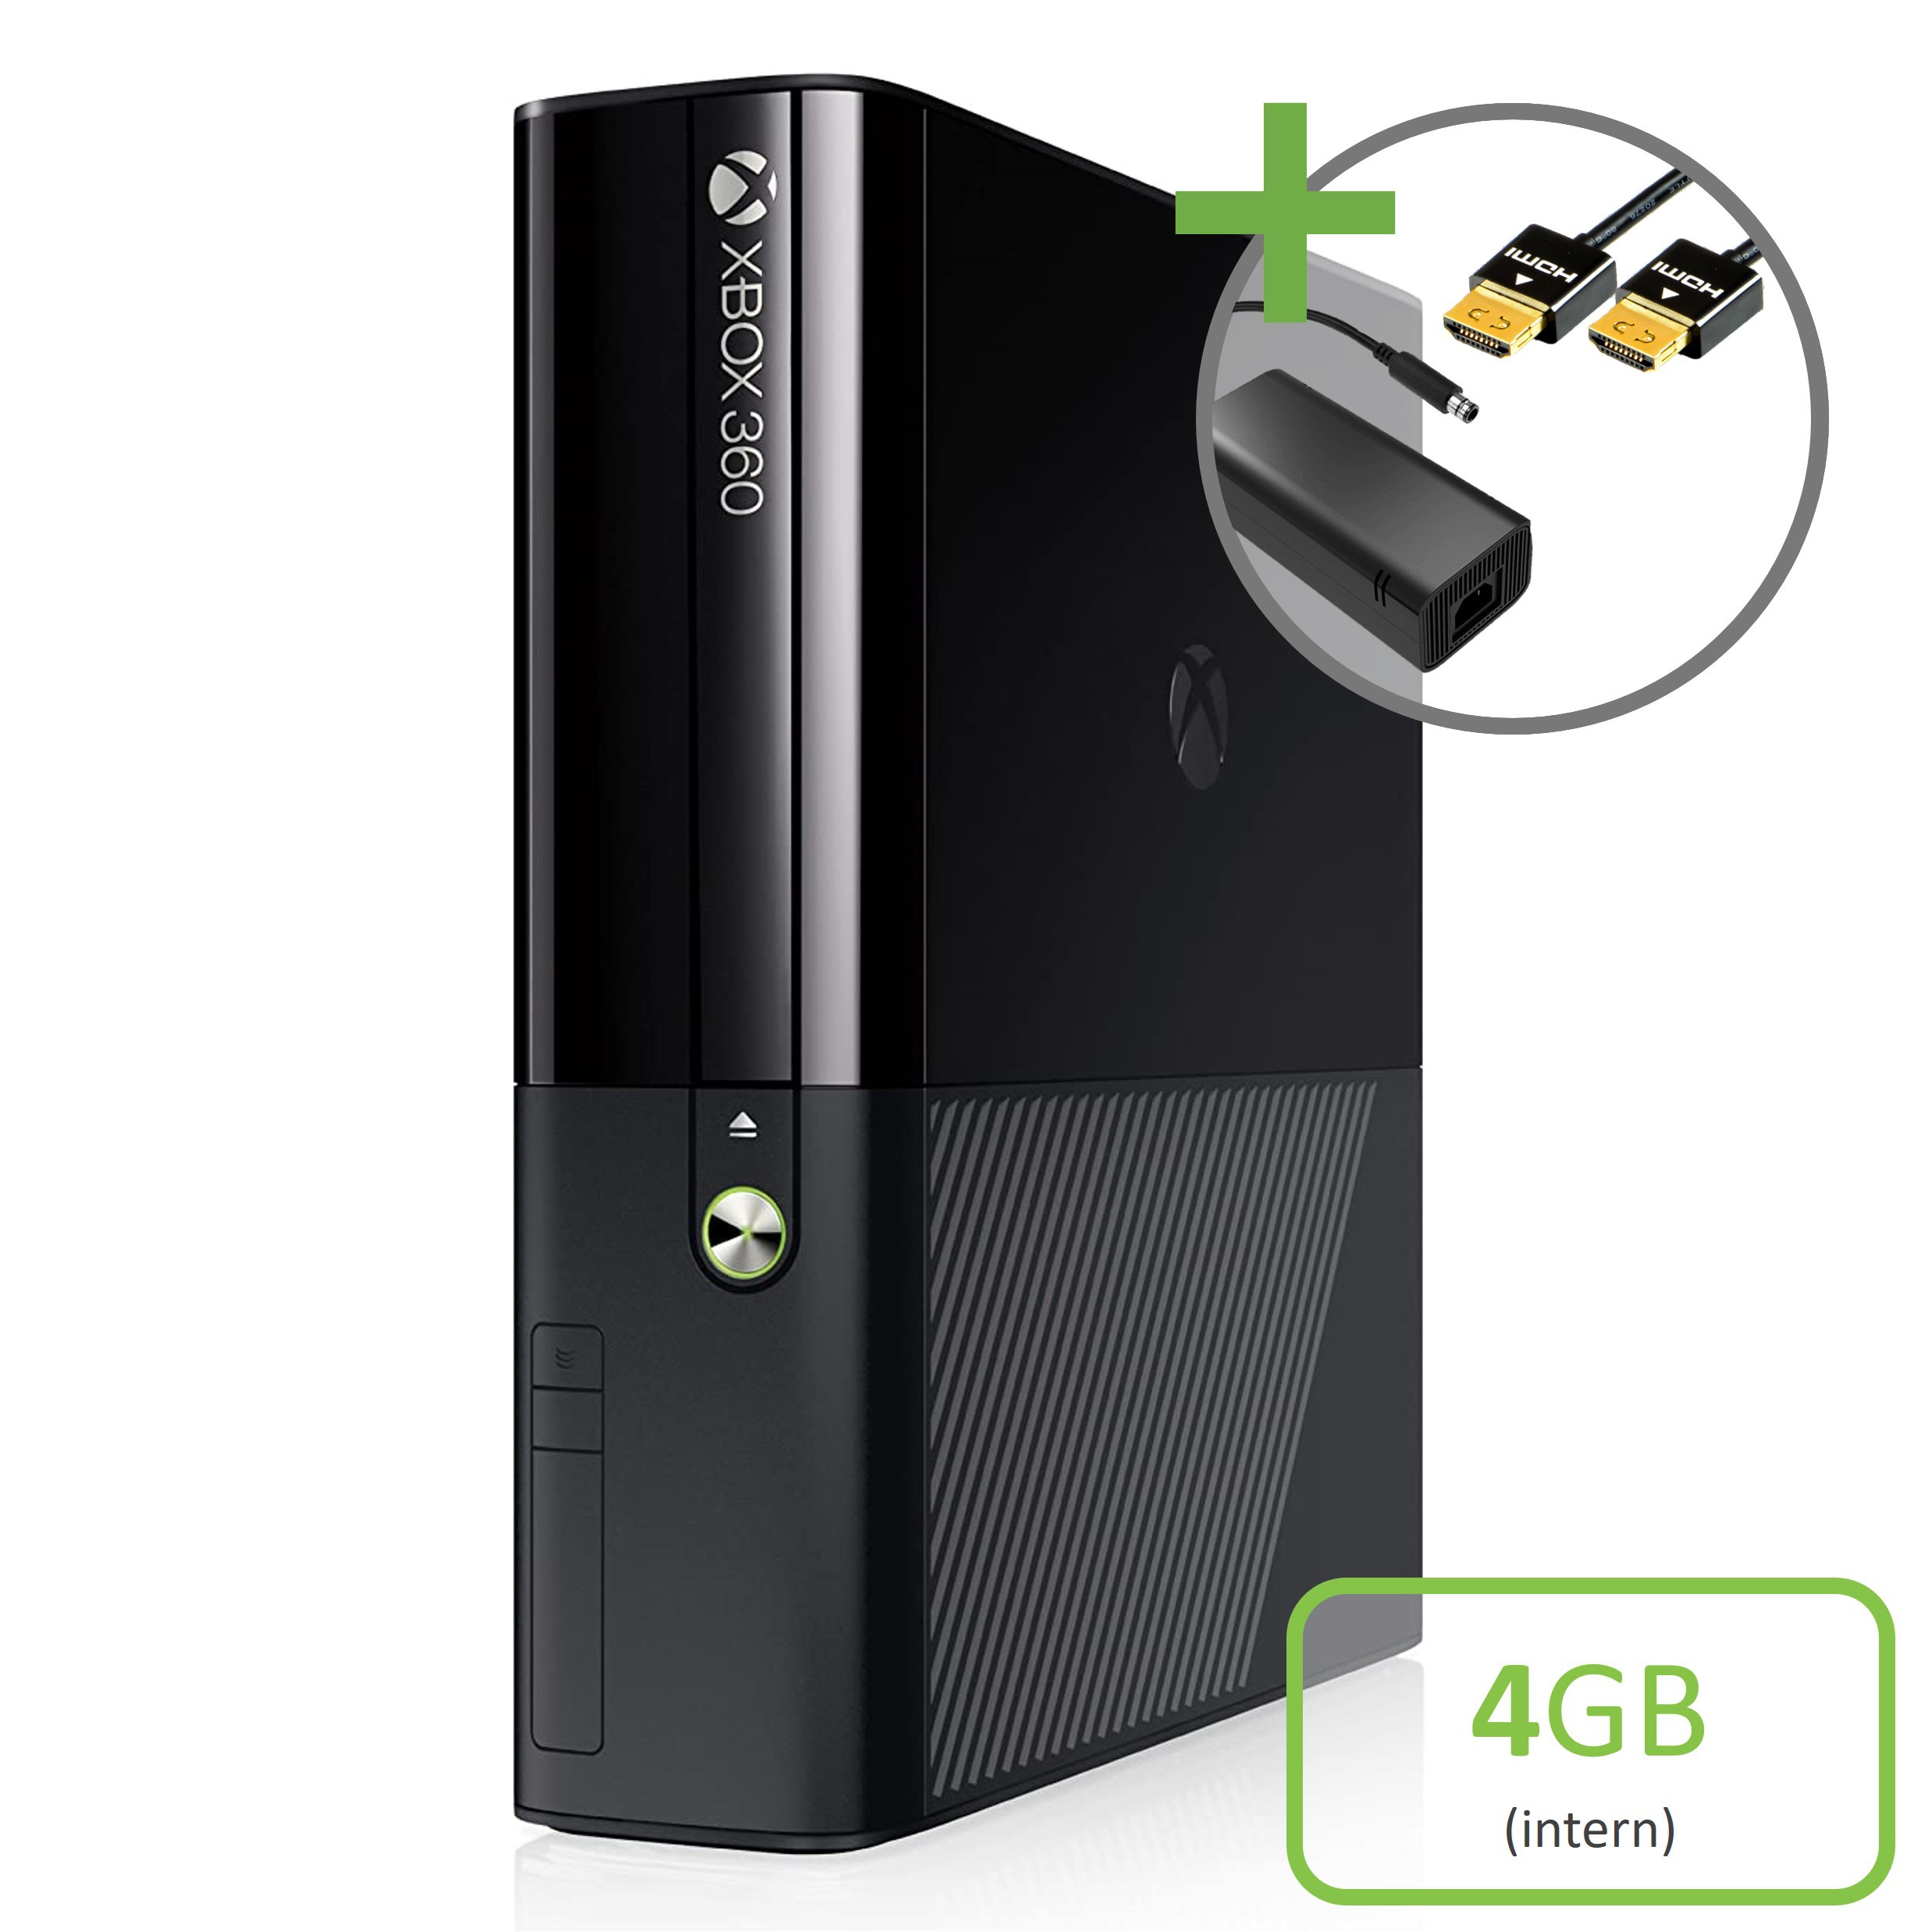 Microsoft Xbox 360 New Slim Console (4GB) - Xbox 360 Hardware